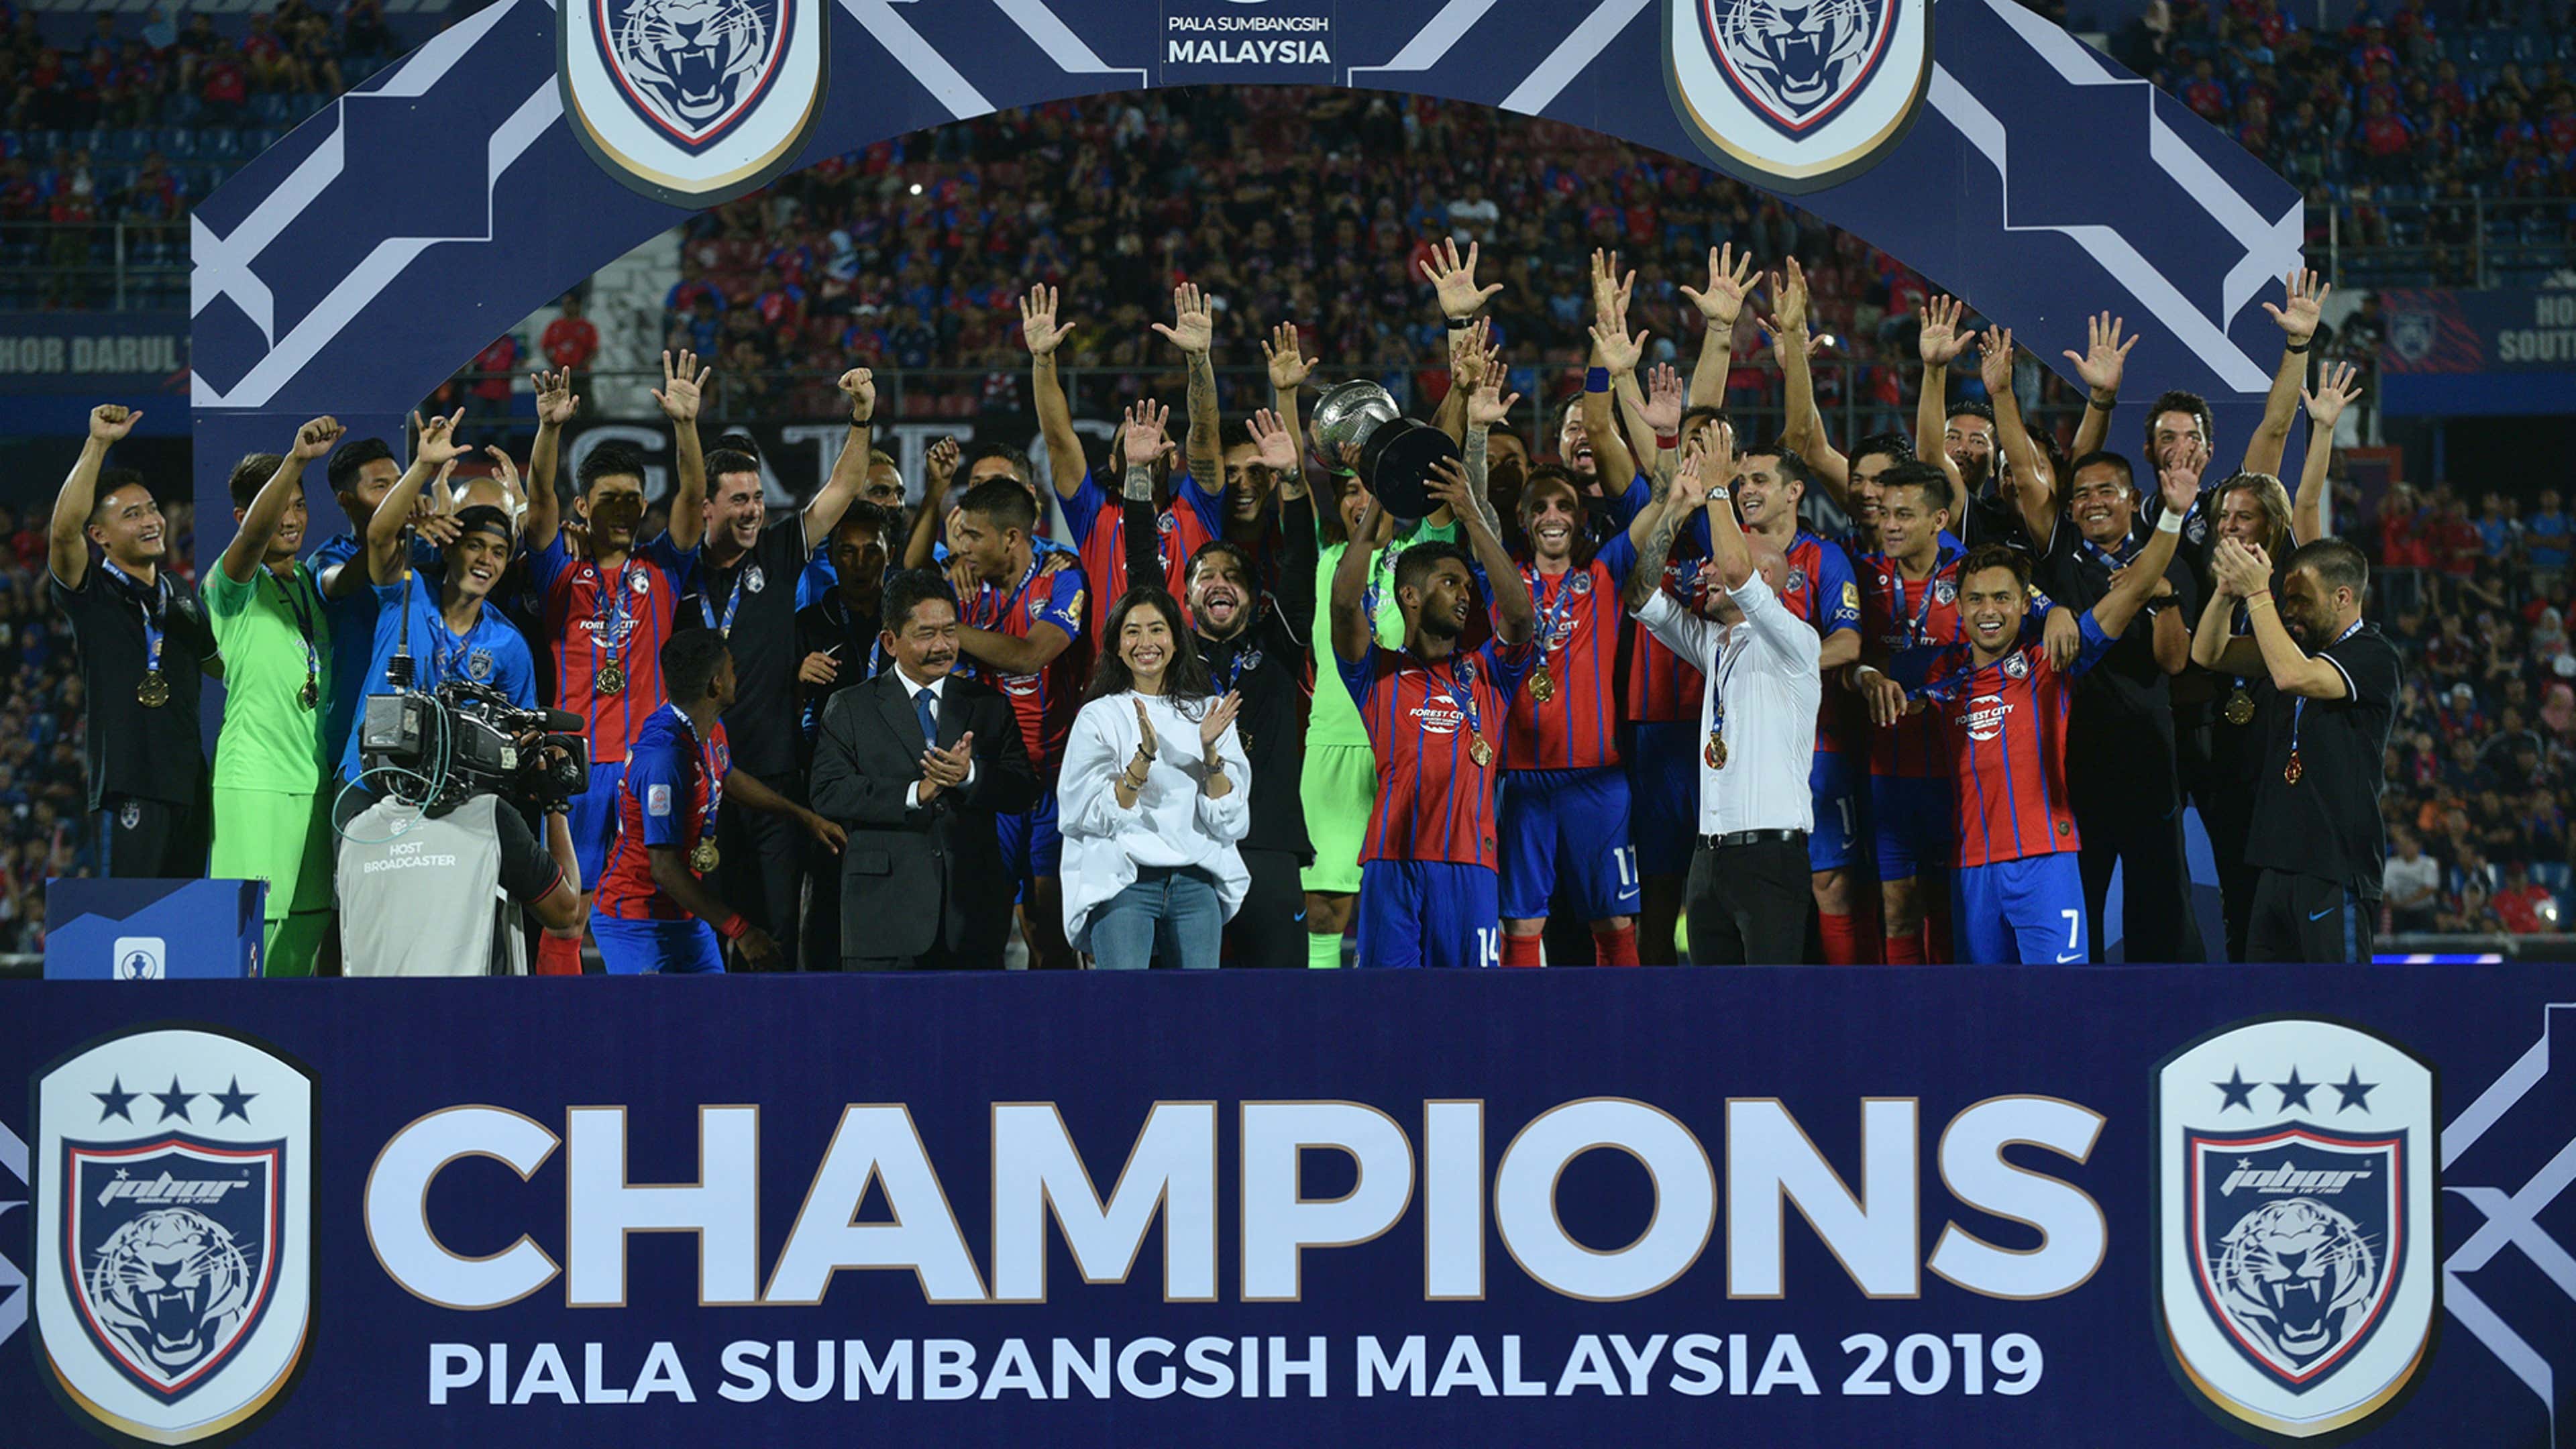 Johor Darul Ta'zim v Perak, Super League, 2 Feb 2019